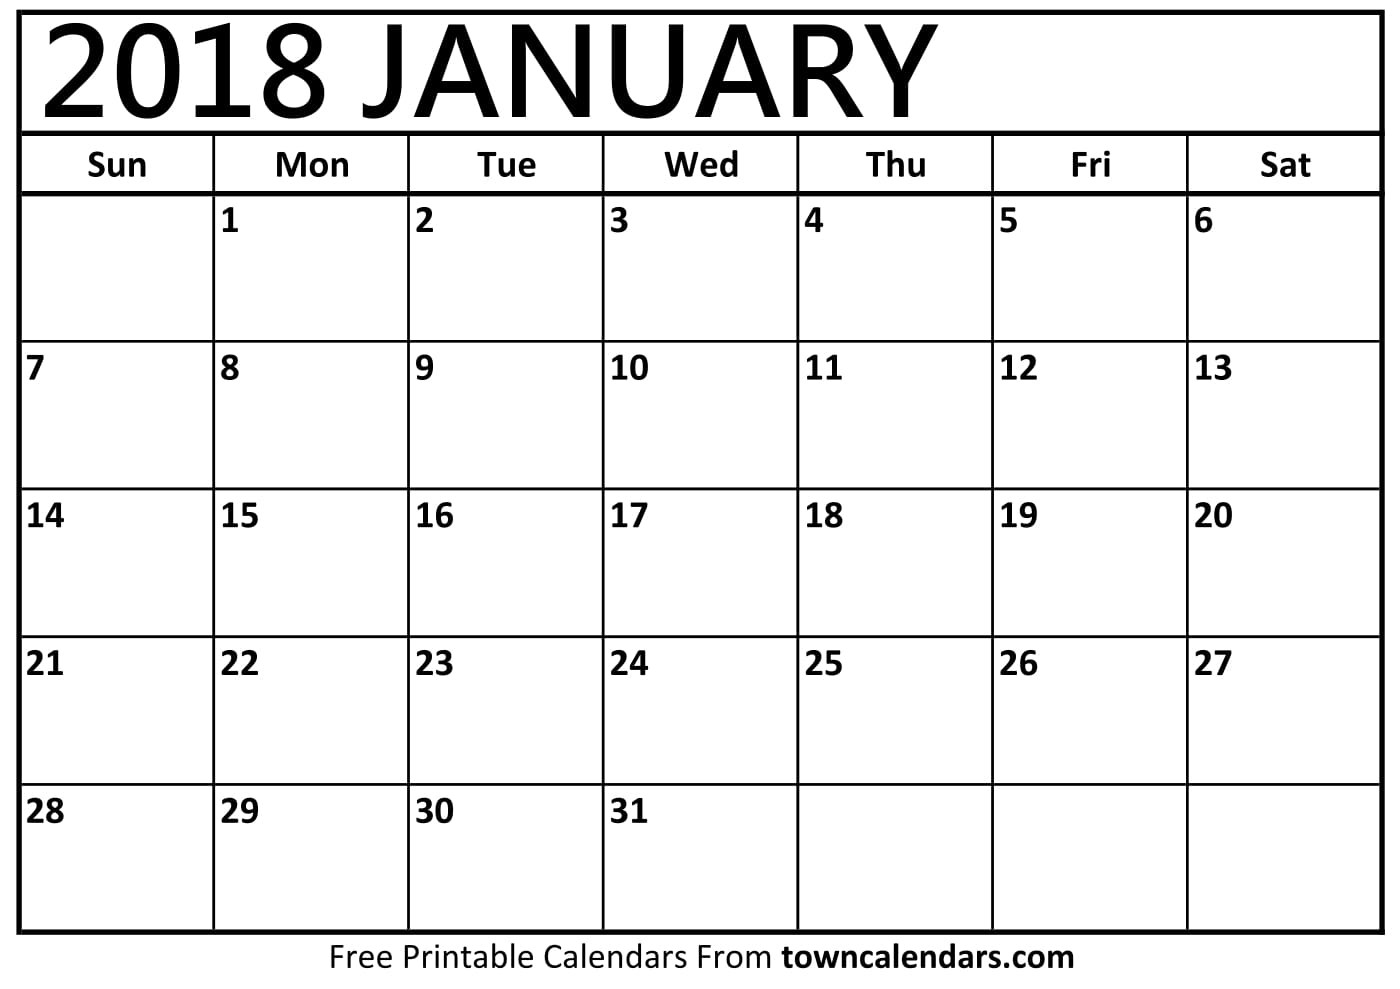 2018 Calendar Printable towncalendars